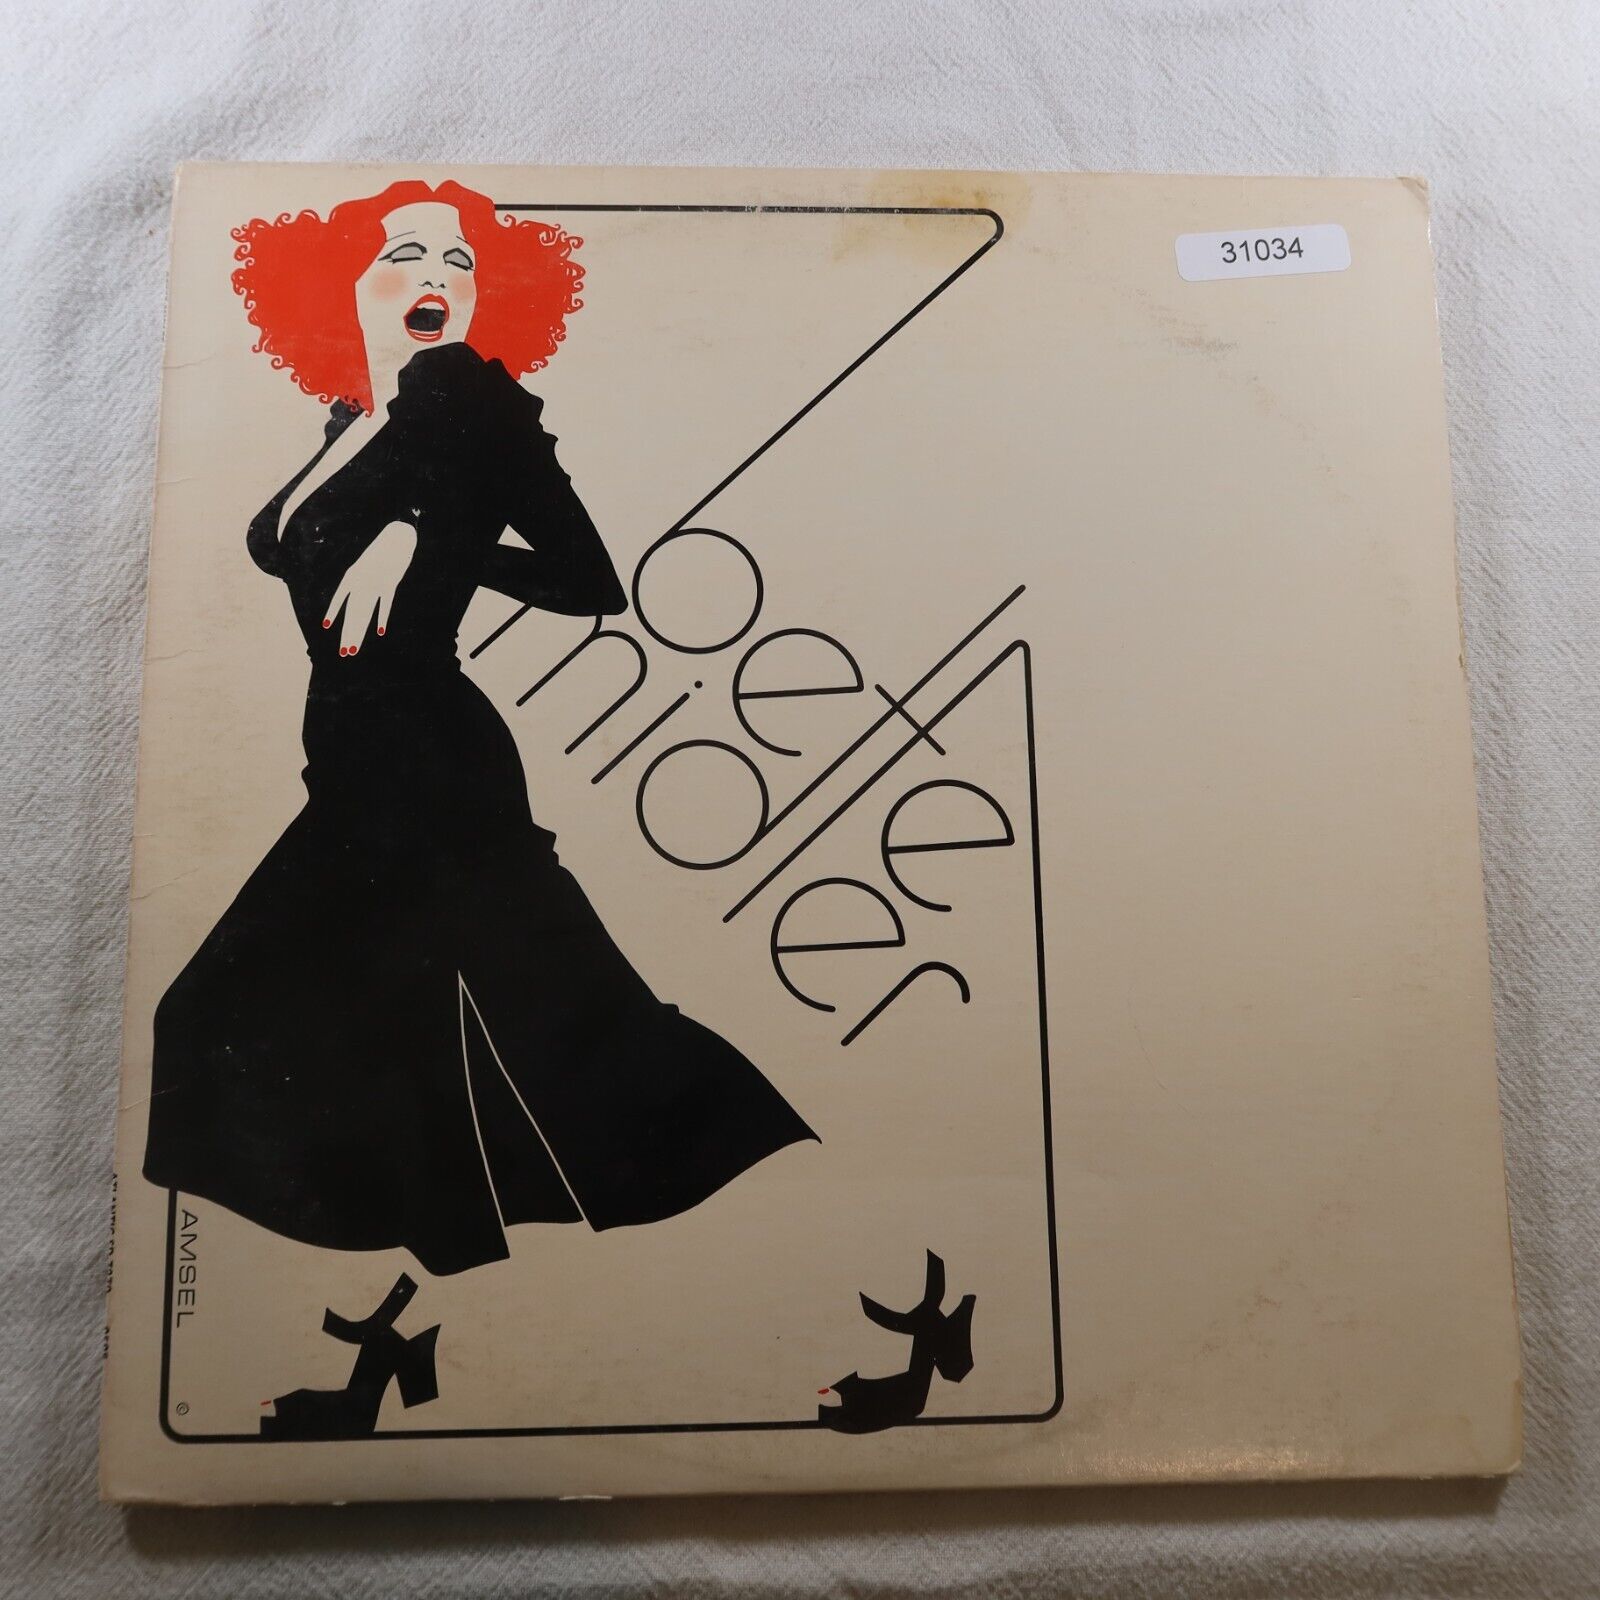 Bette Midler Self Titled LP Vinyl Record Album